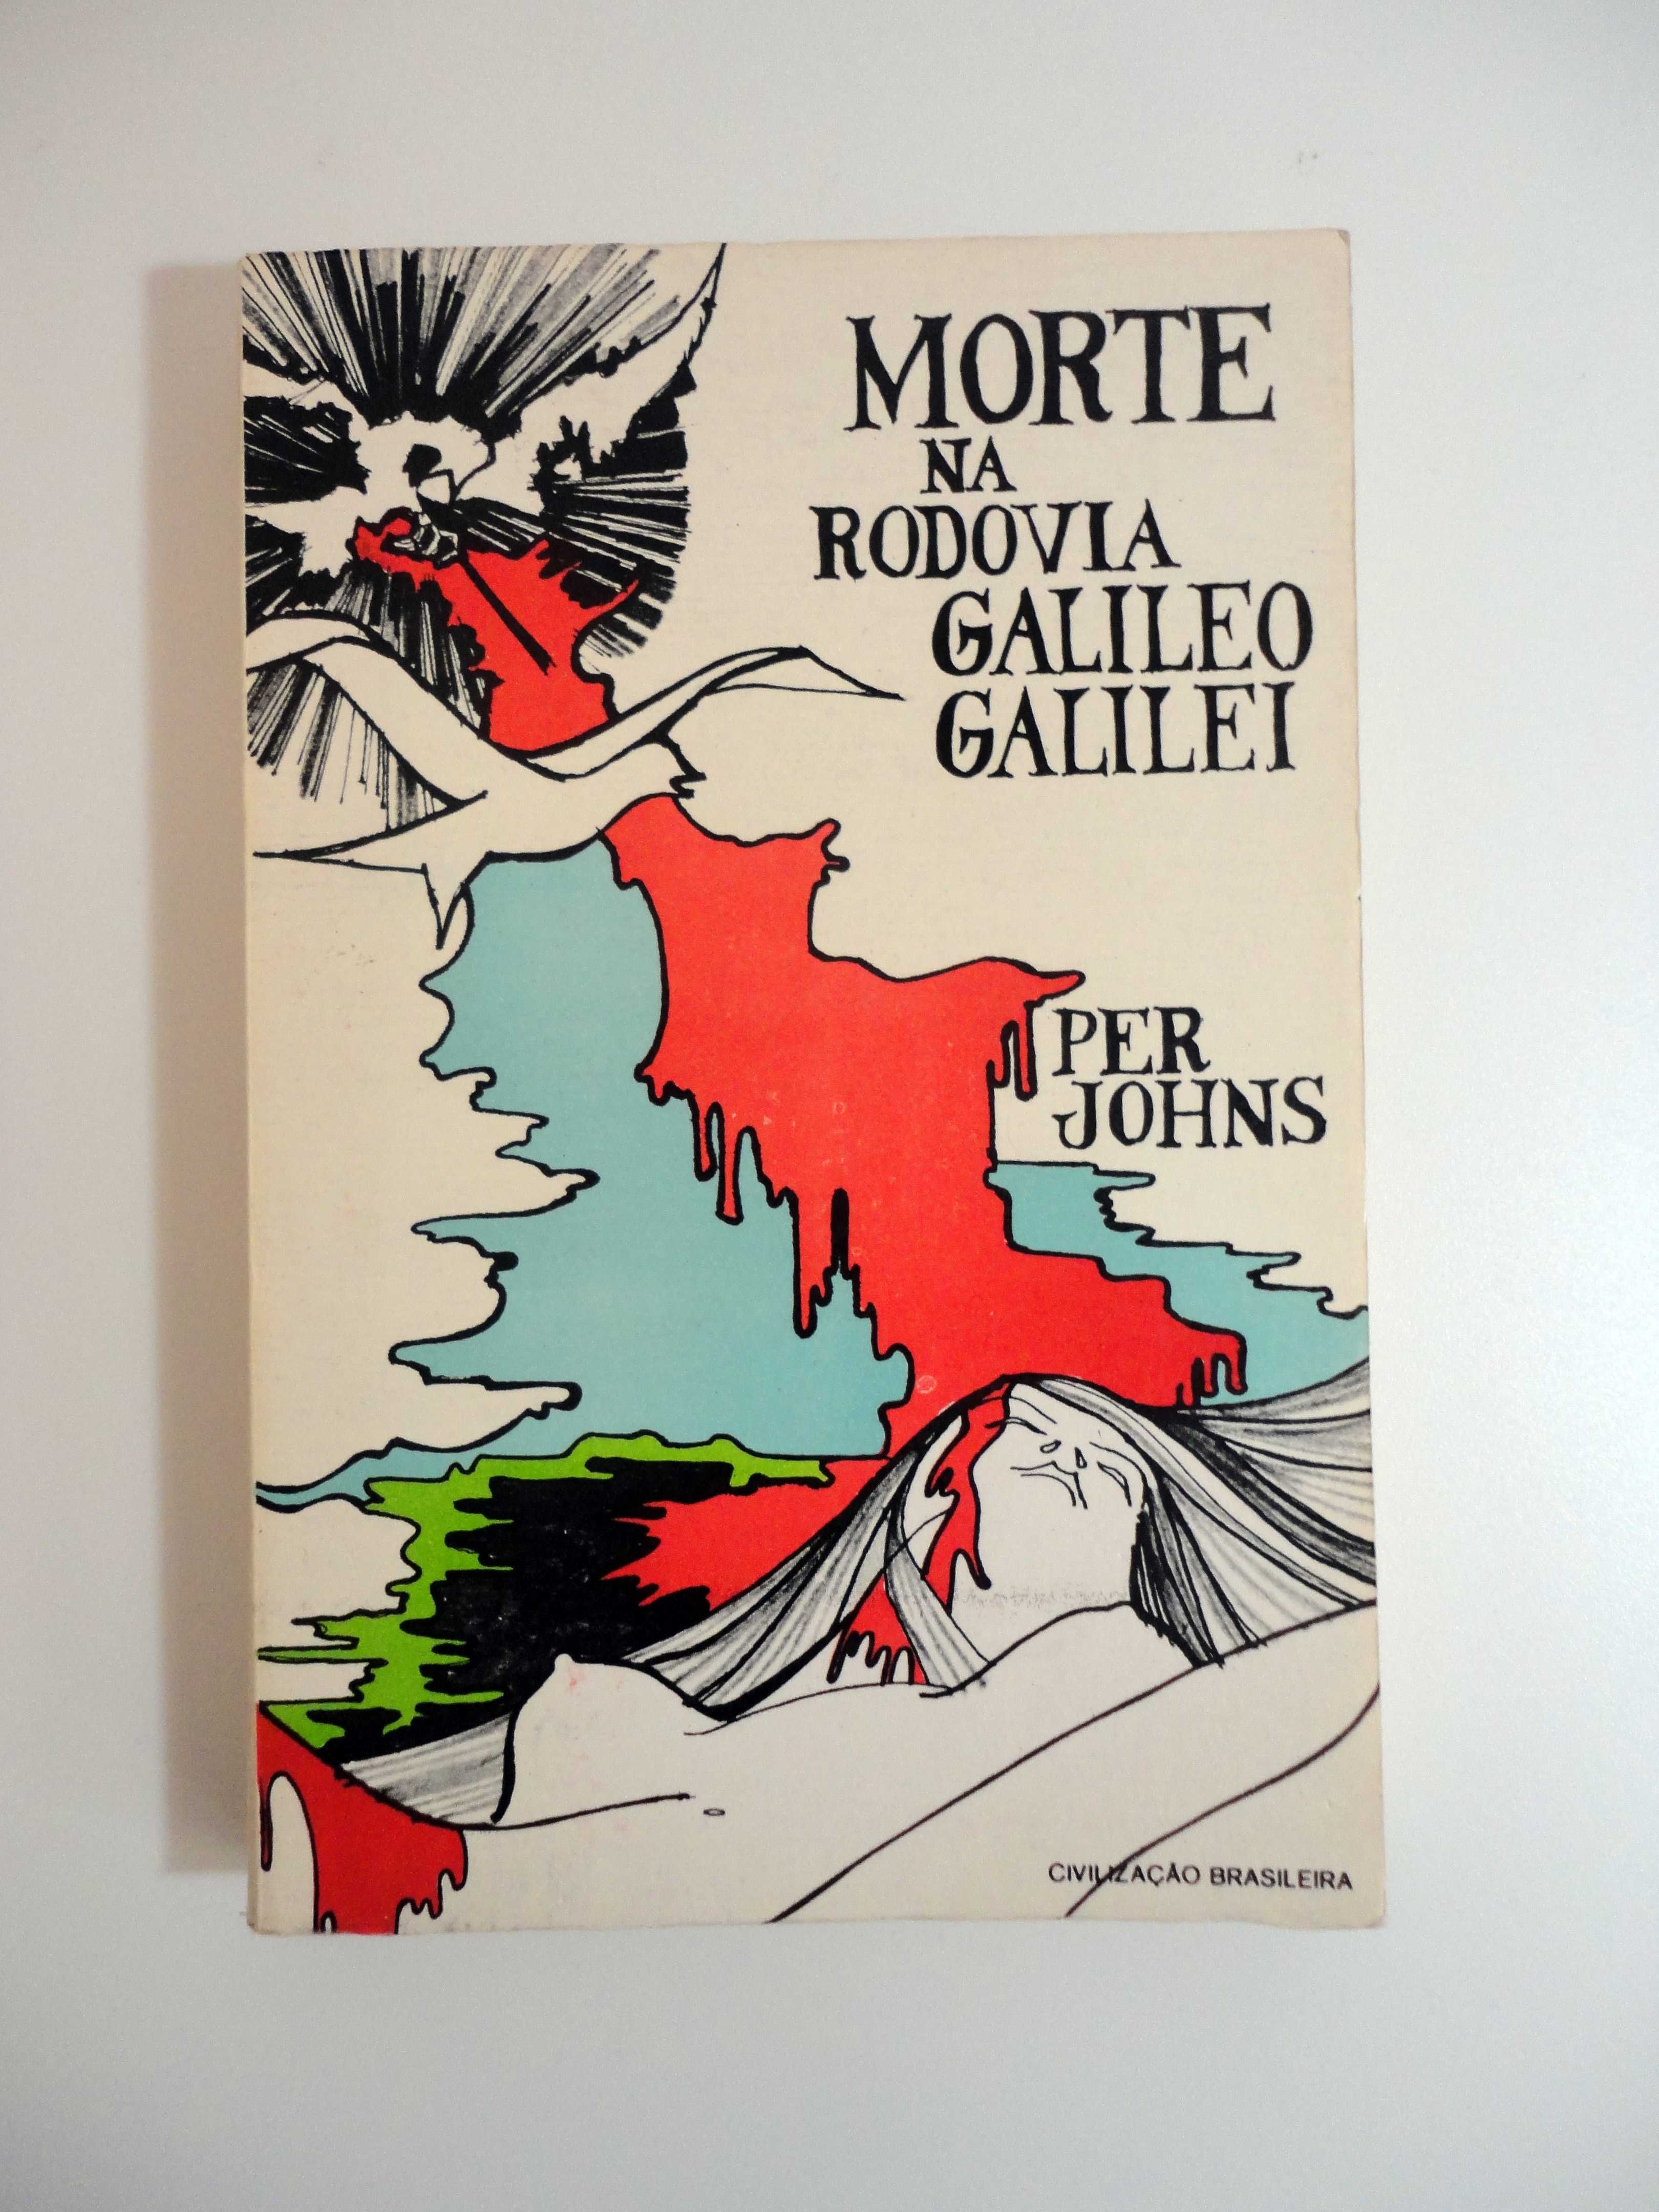 "Morte na Rodovia Galileo Galilei" (Per Johns)